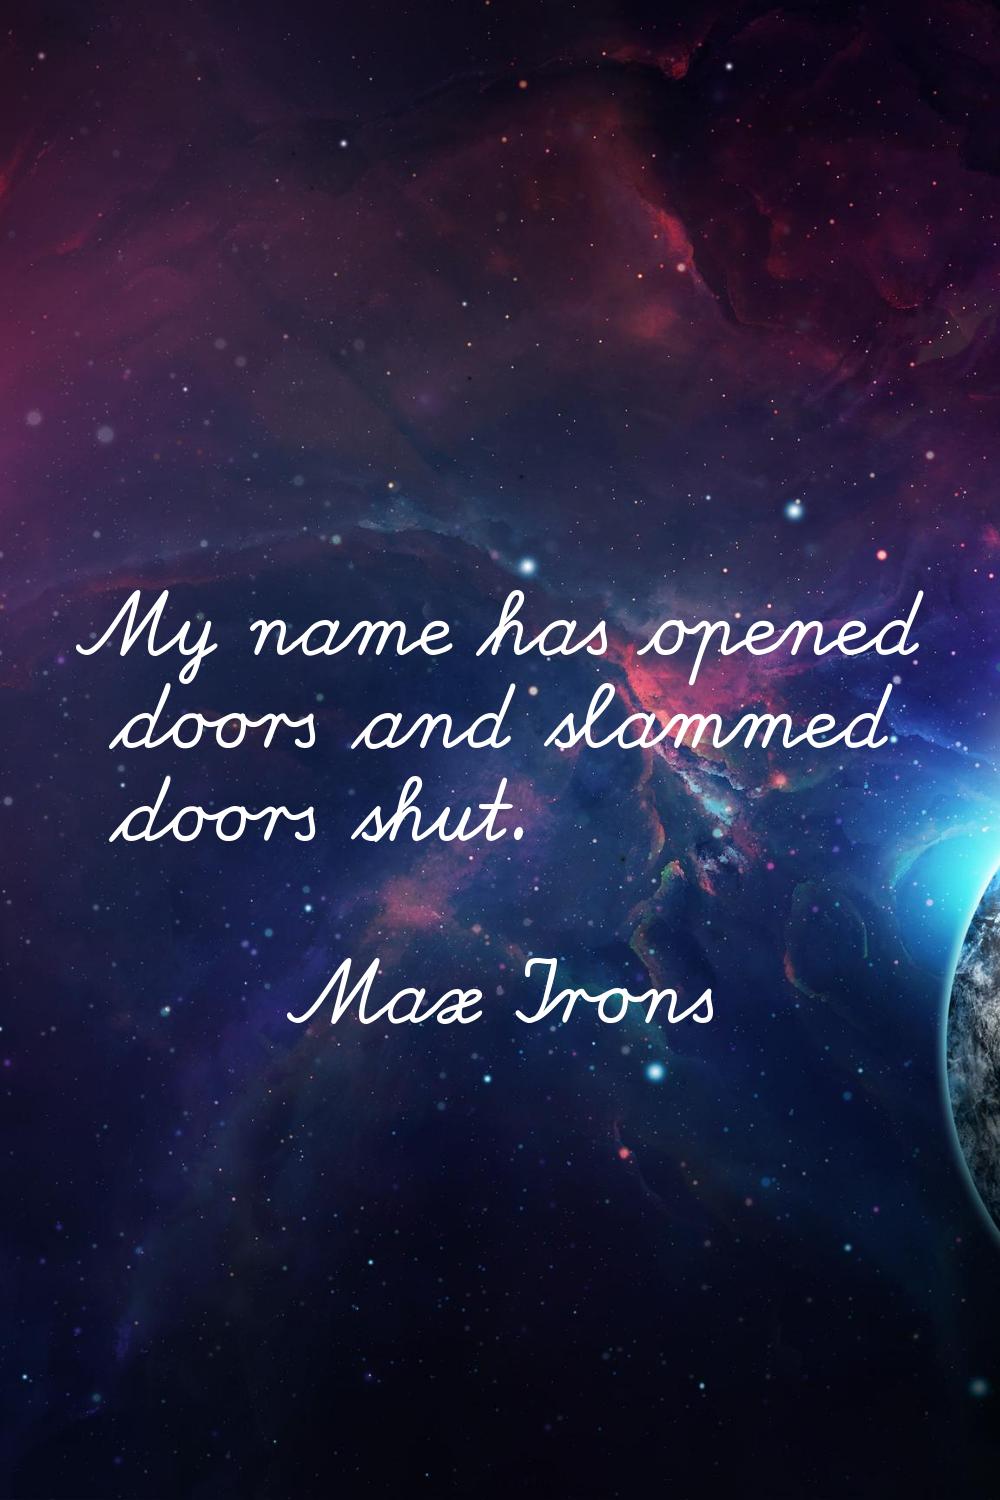 My name has opened doors and slammed doors shut.